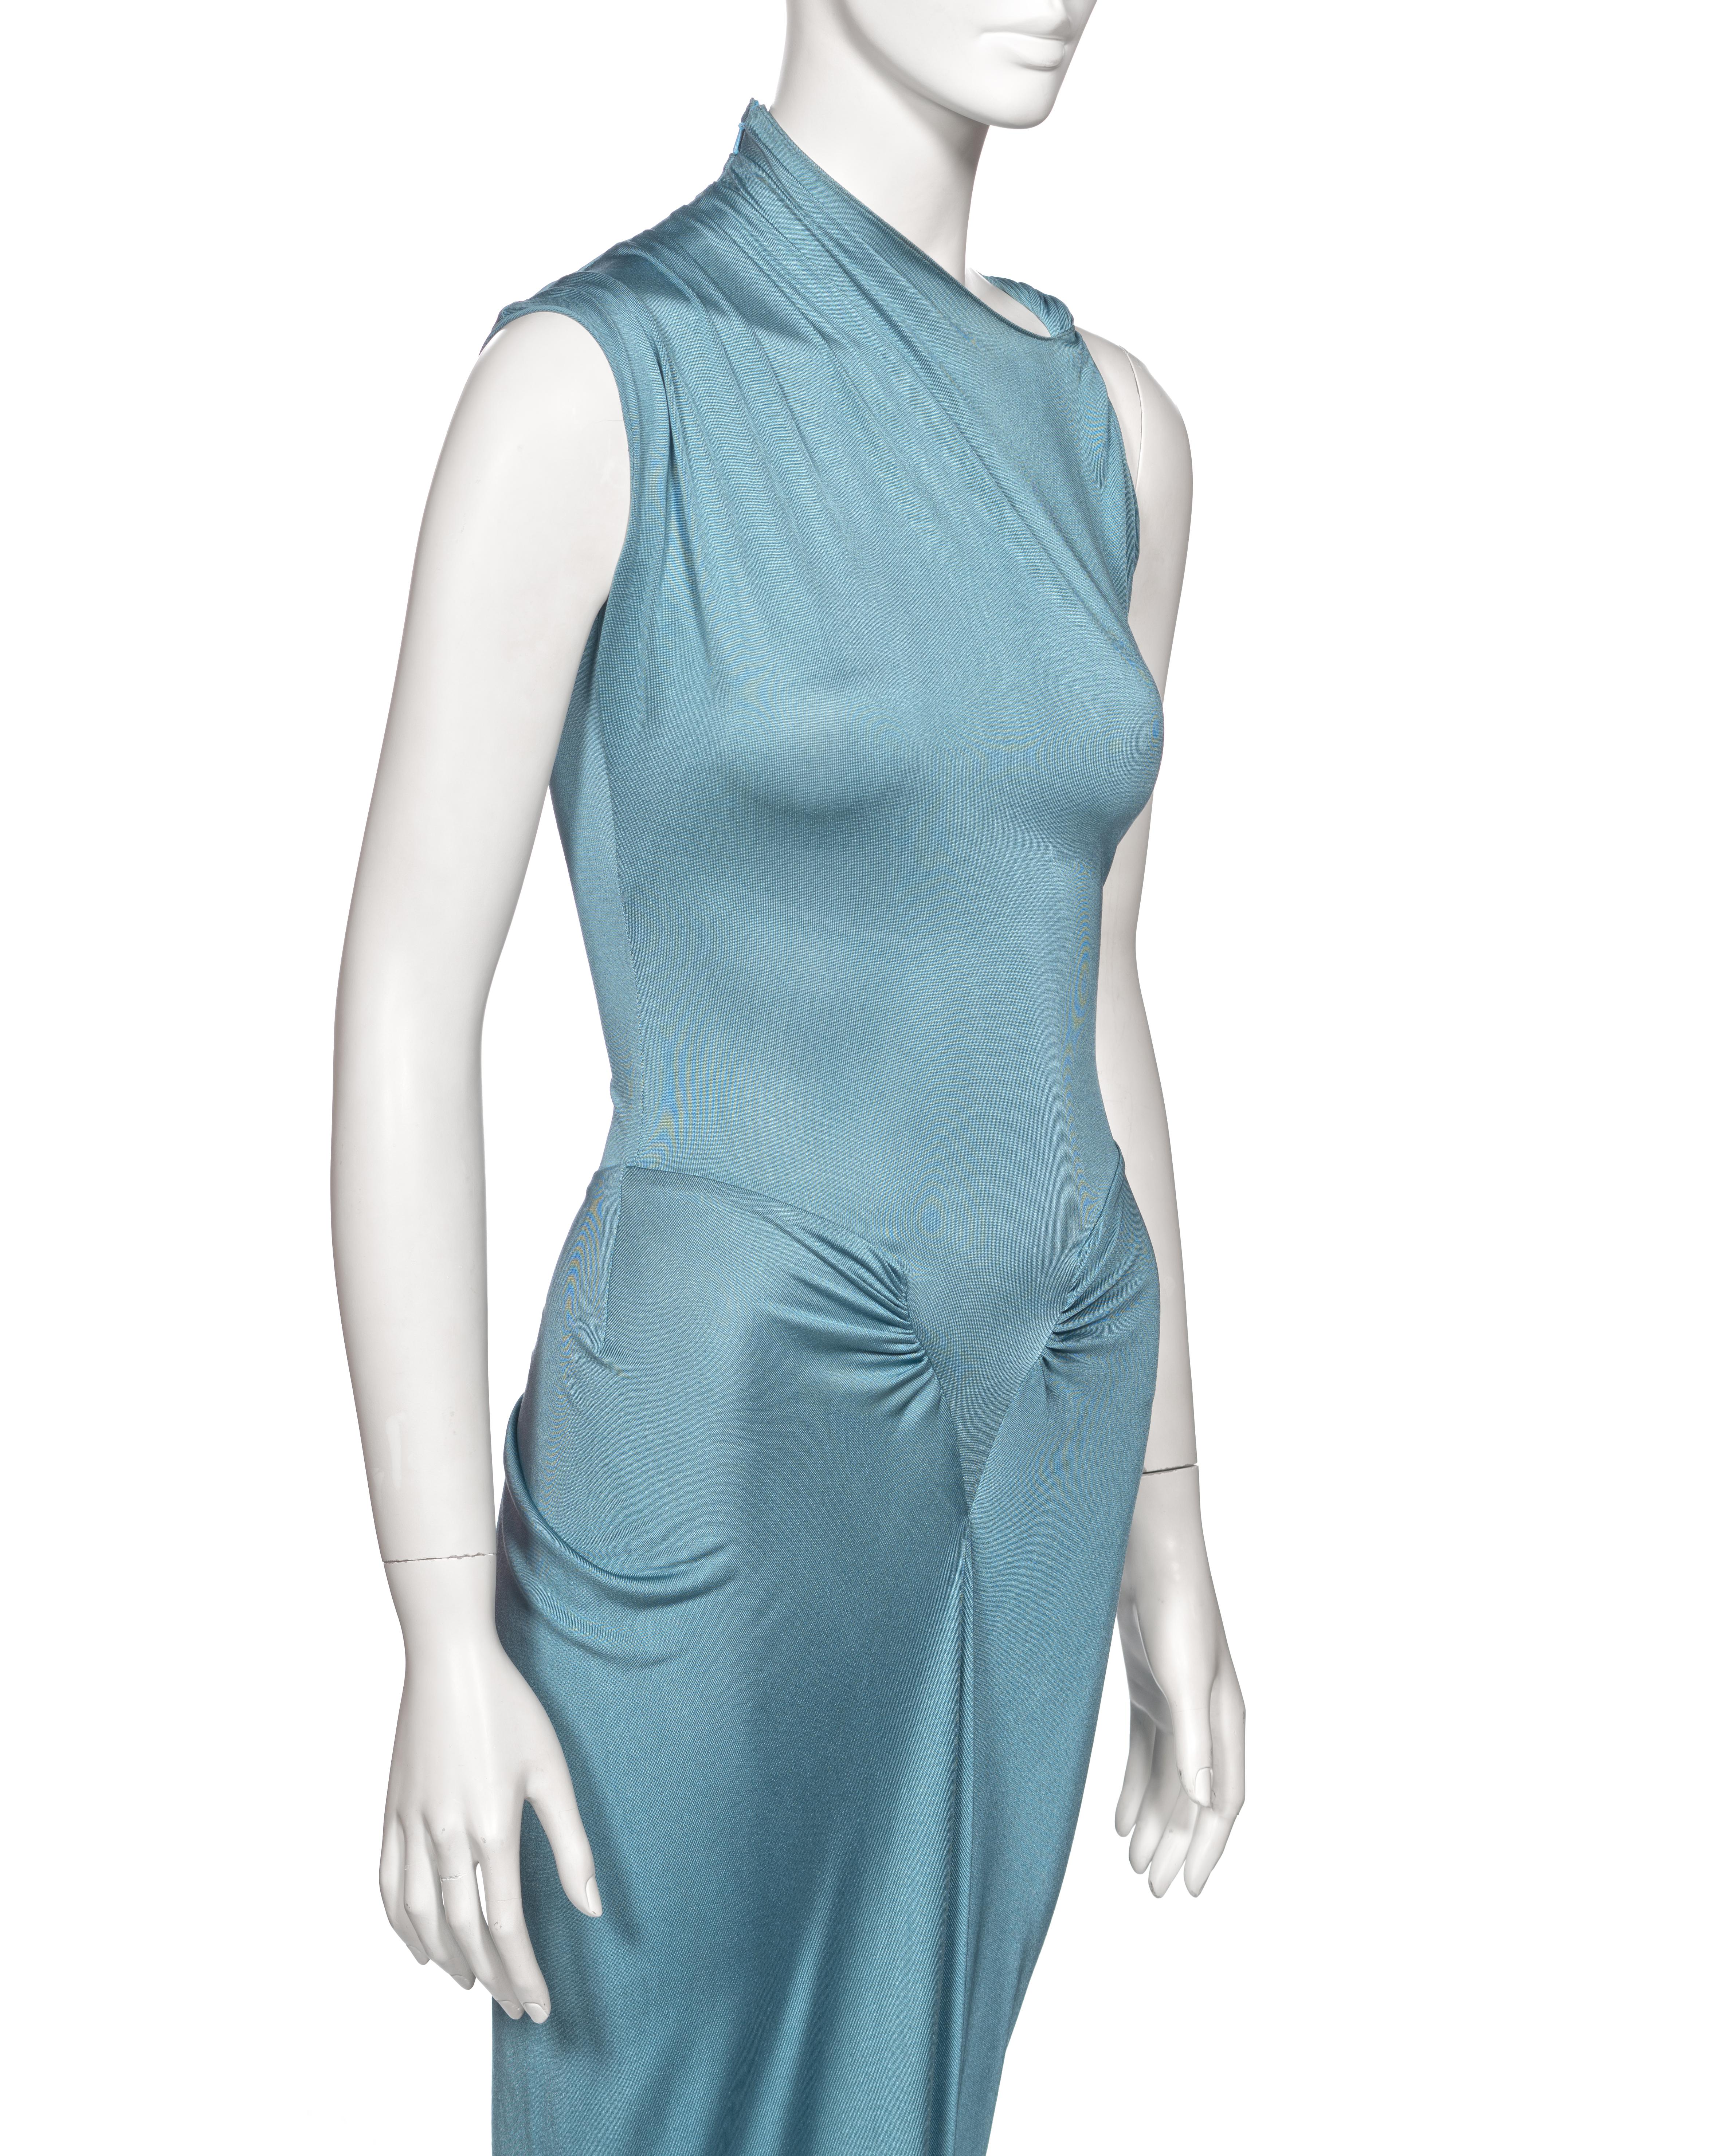 Christian Dior by John Galliano Powder Blue Silk Jersey Evening Dress, ss 2000 For Sale 1